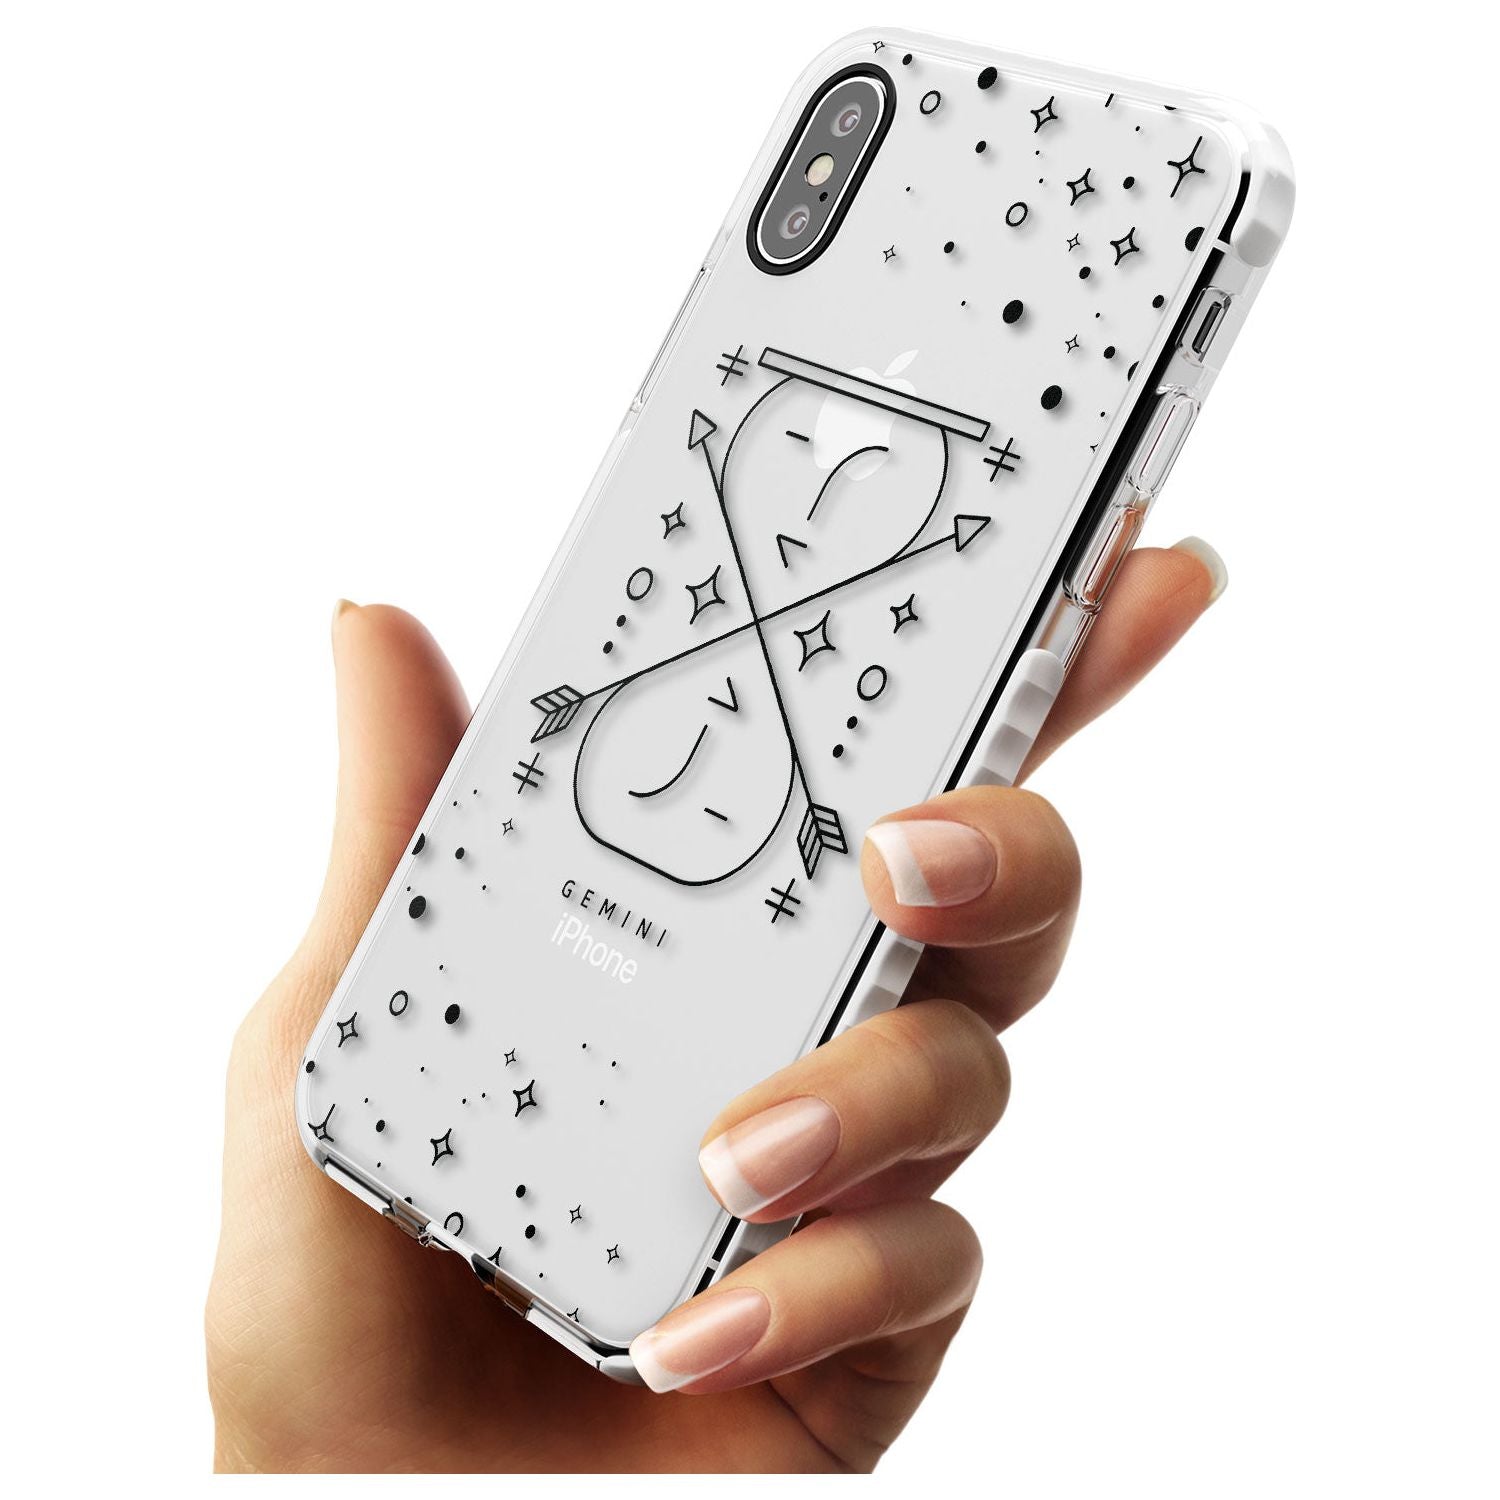 Gemini Emblem - Transparent Design Impact Phone Case for iPhone X XS Max XR